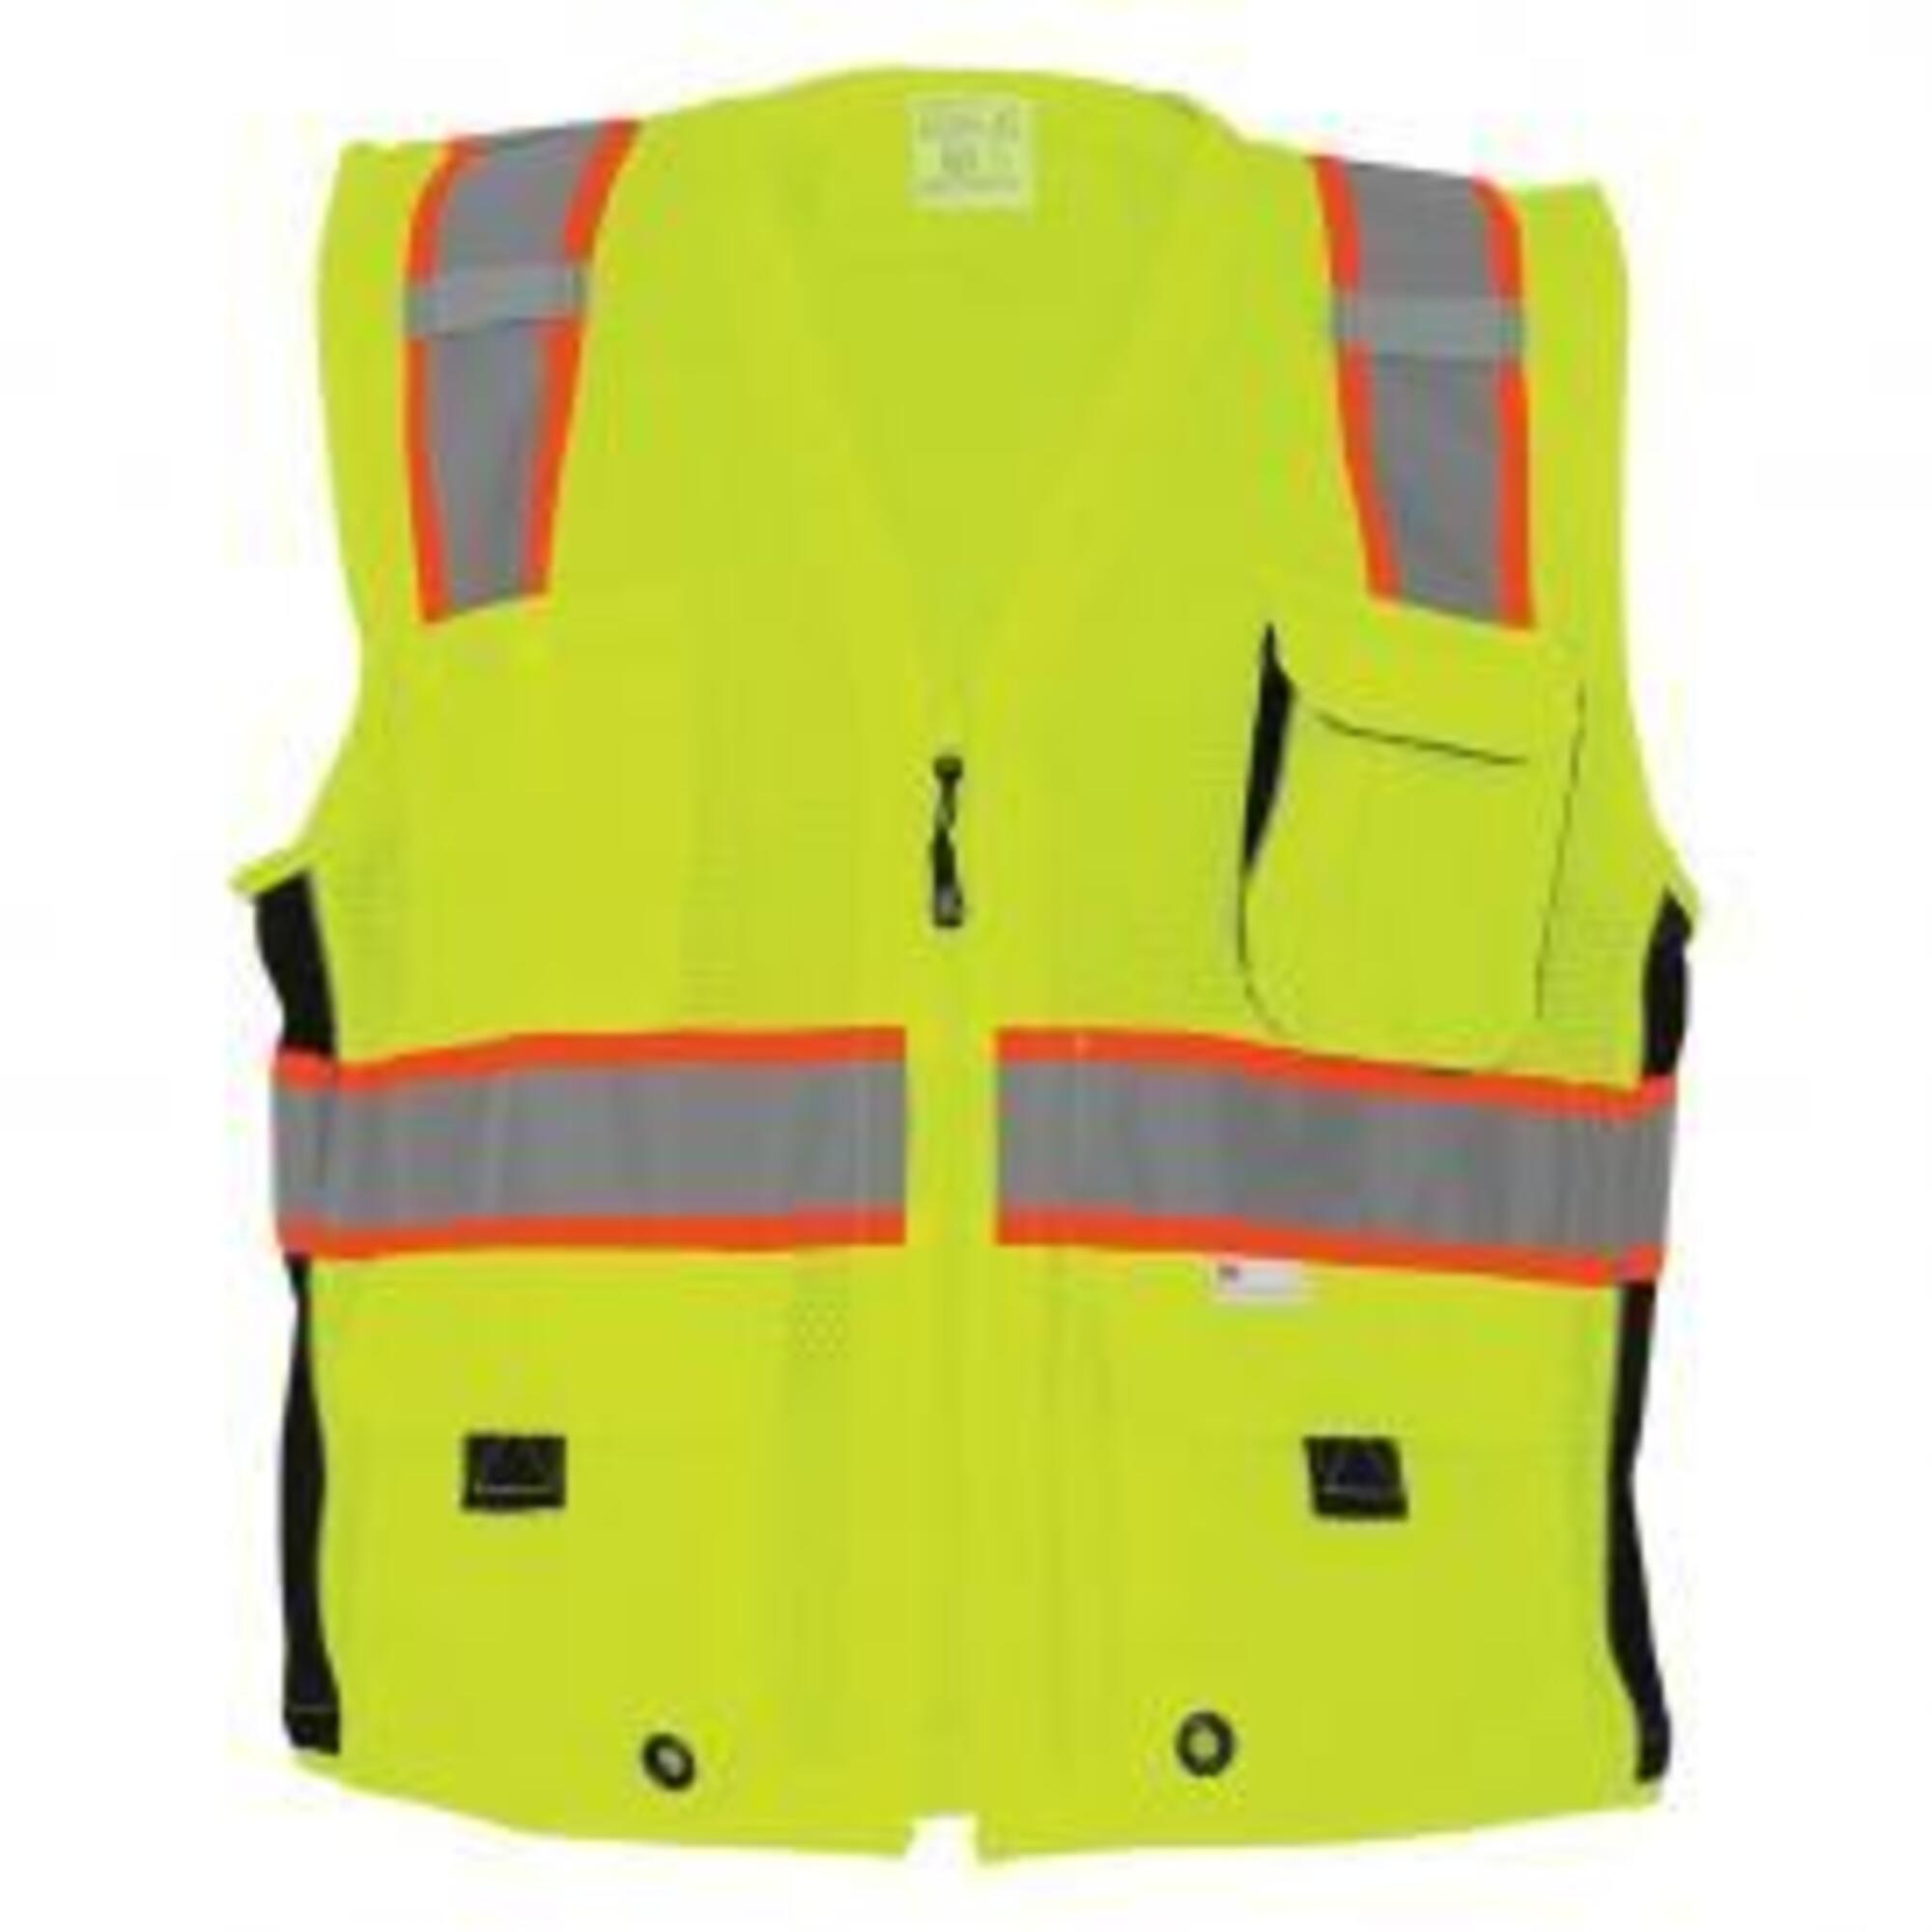 FrogWear Surveyors Safety Vest, 5XL, Yellow/Green, Model GLO-079-5XL